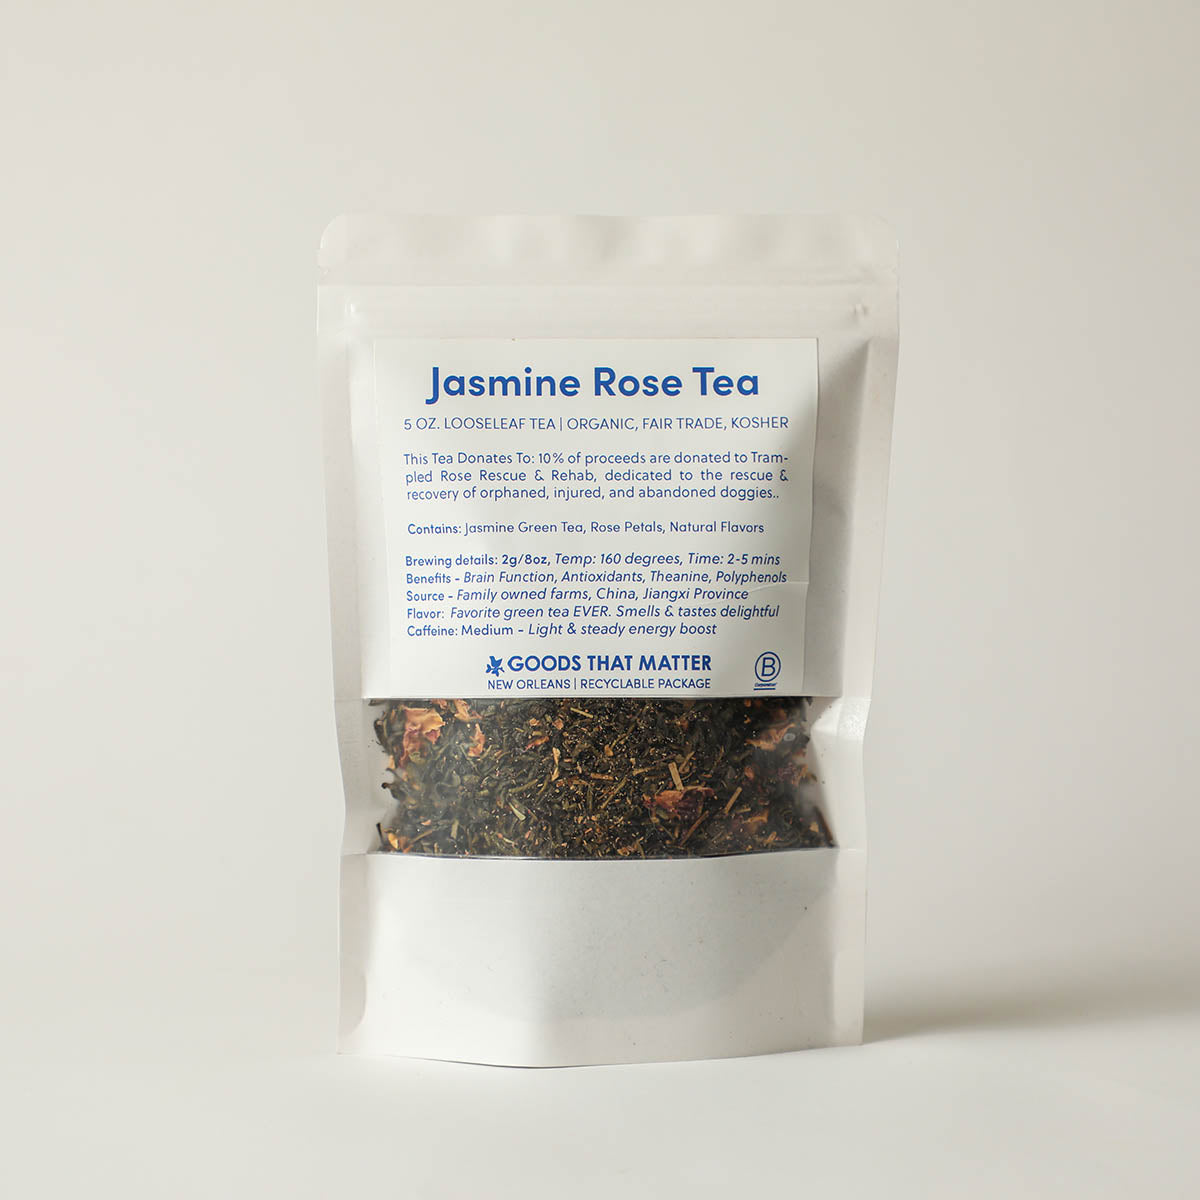 Jasmine Rose Looseleaf Benevolent Tea - Gives to Trampled Rose Rescue & Rehab